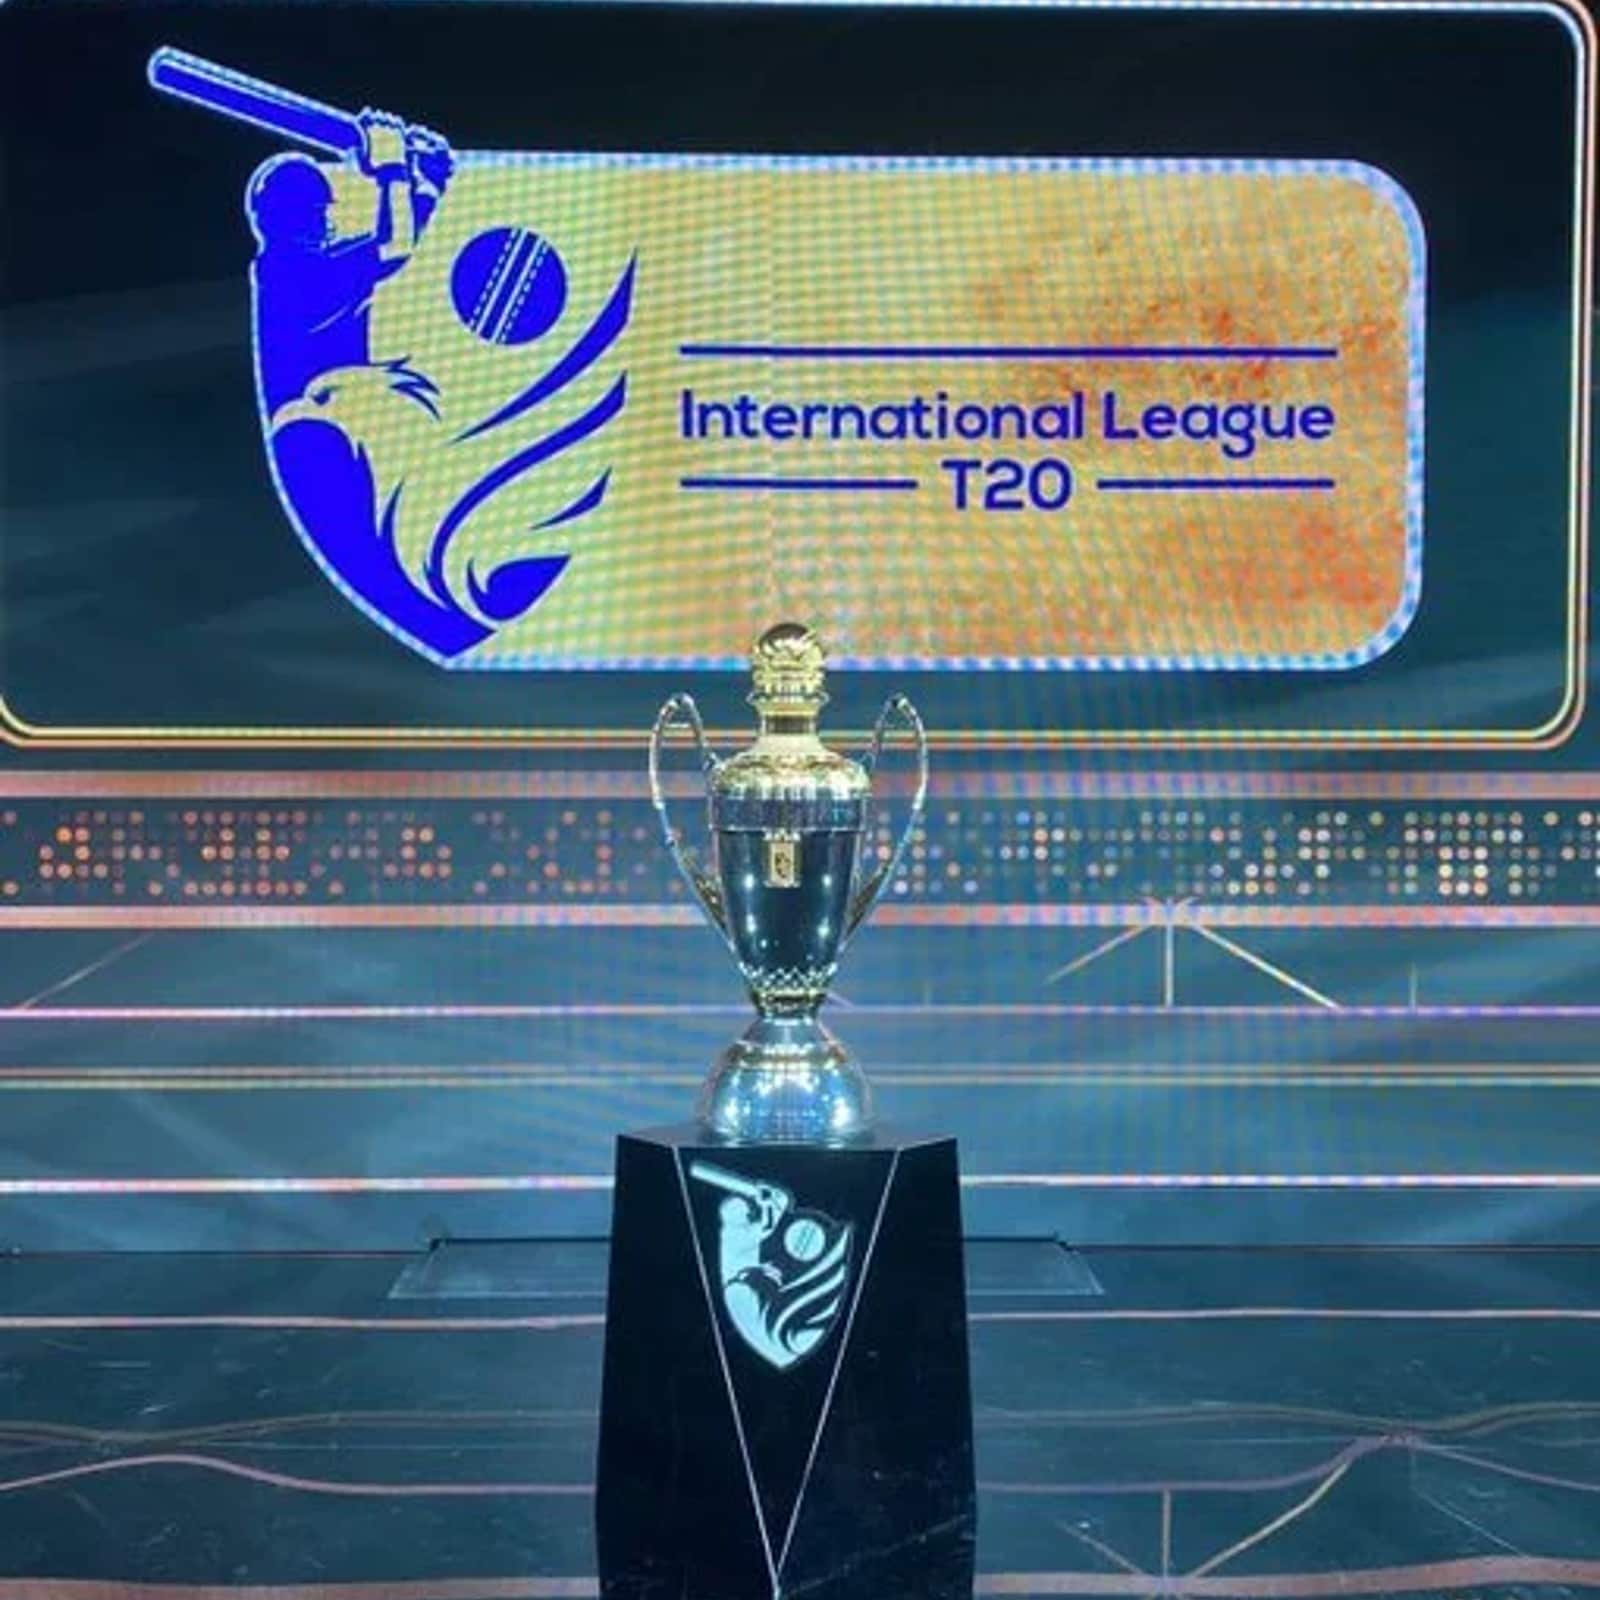 international league t20 live streaming